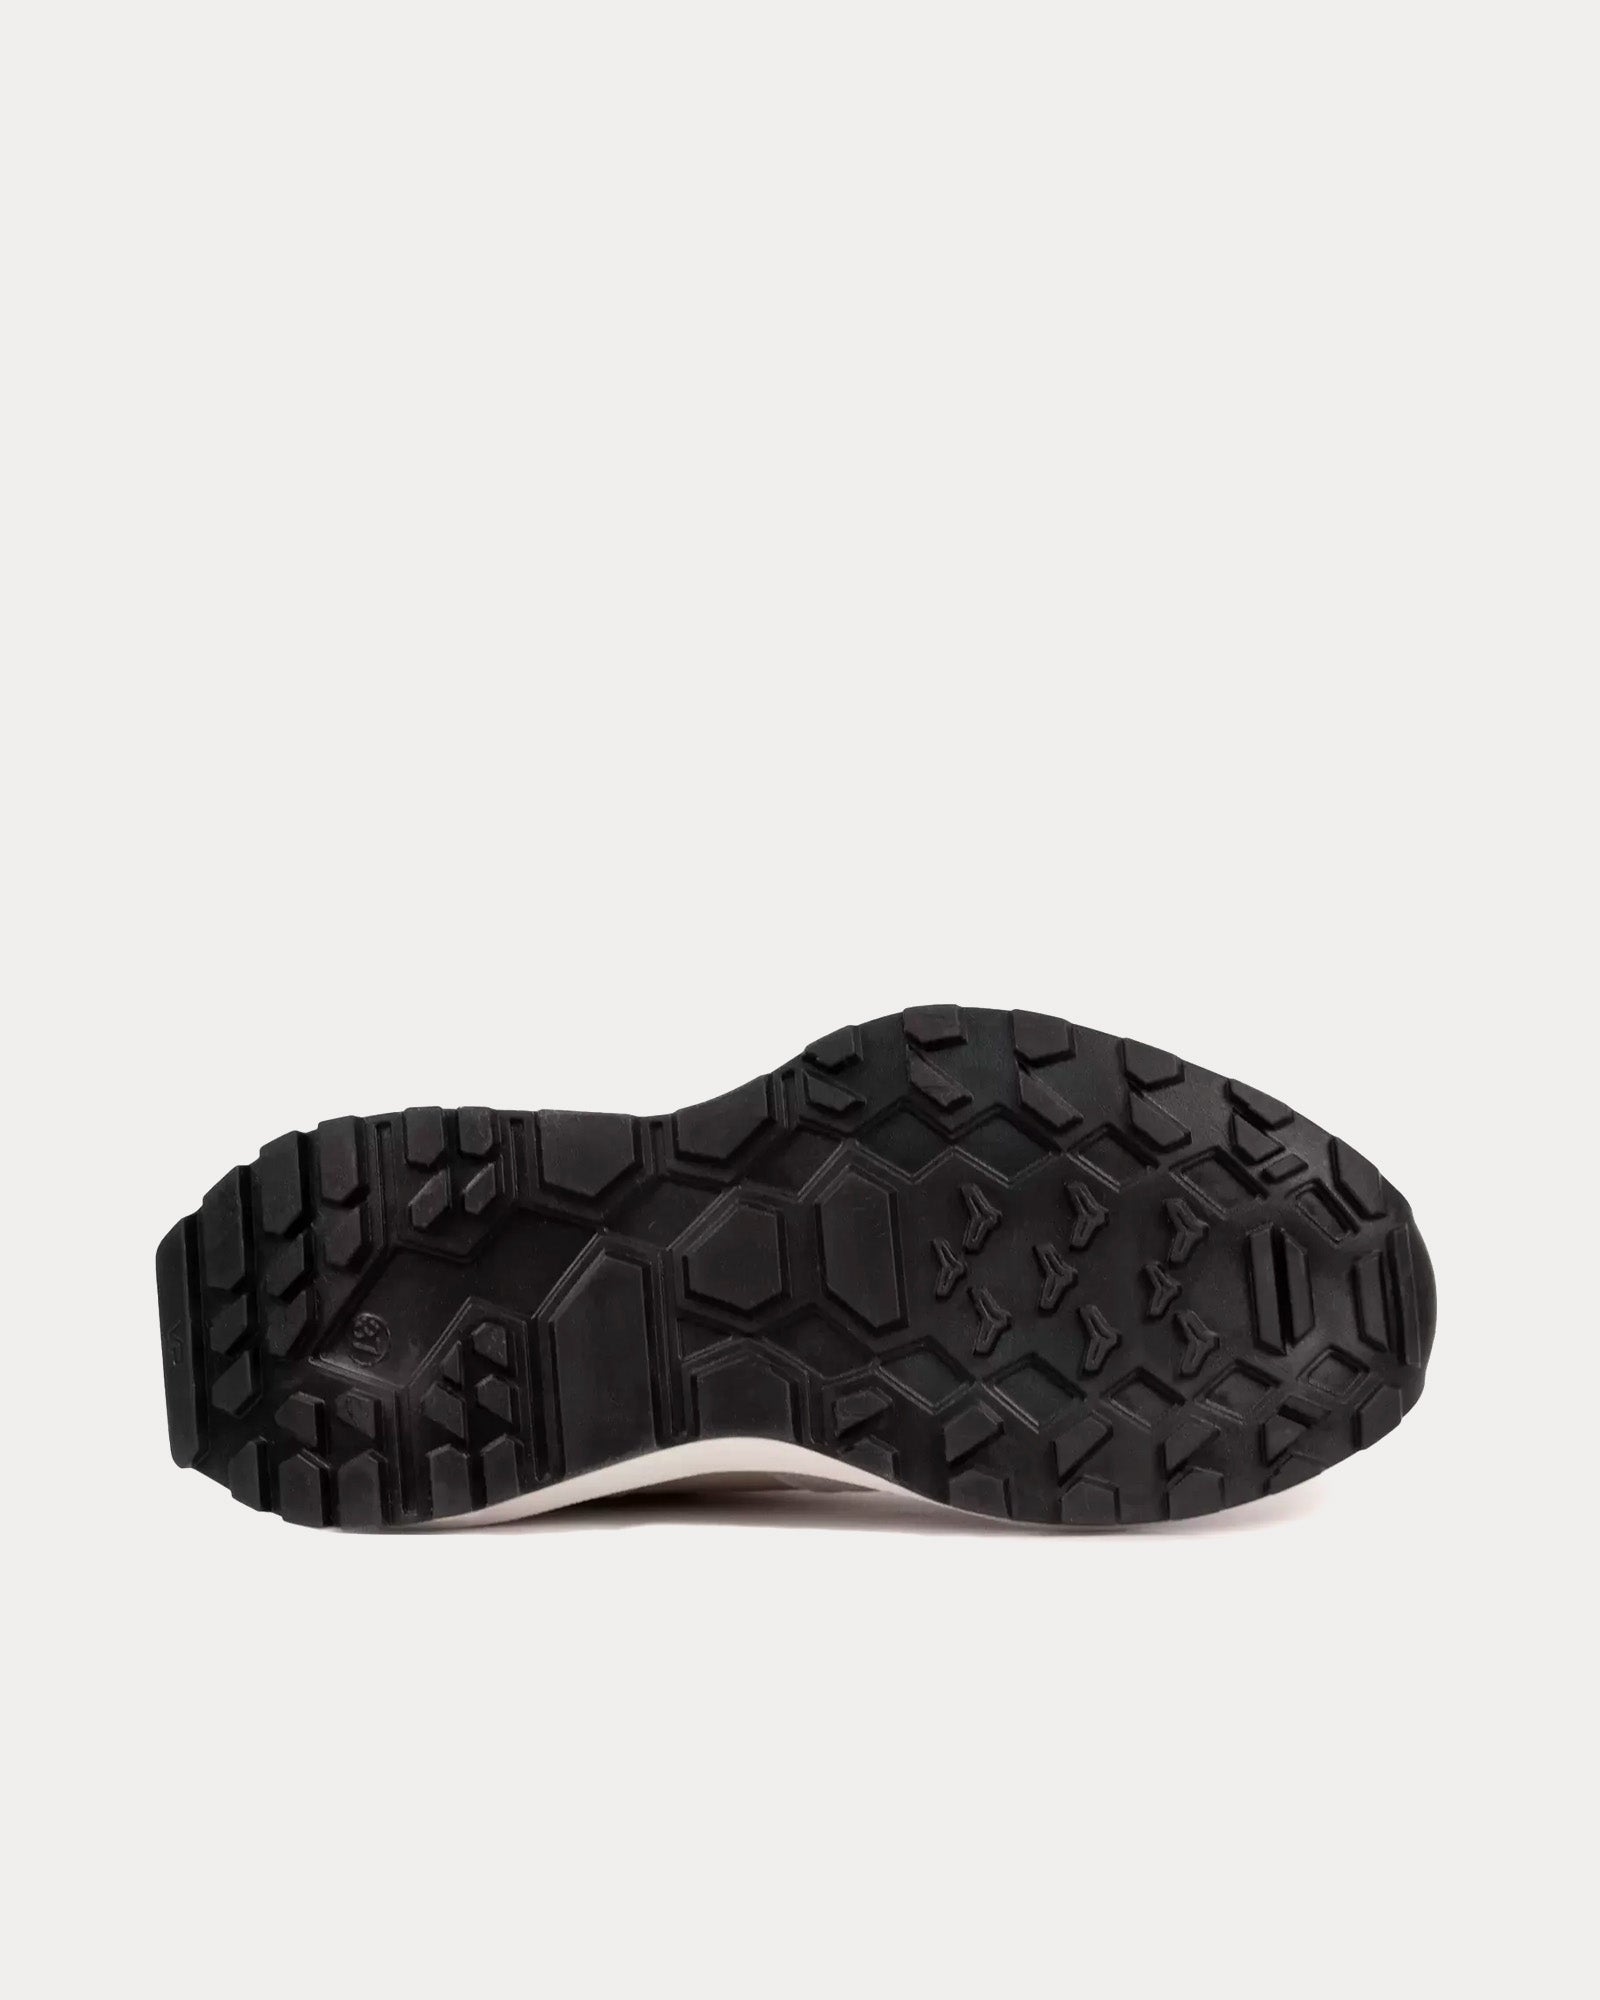 Unseen Footwear - Trinity Leather & Suede Beige / Bone Low Top Sneakers